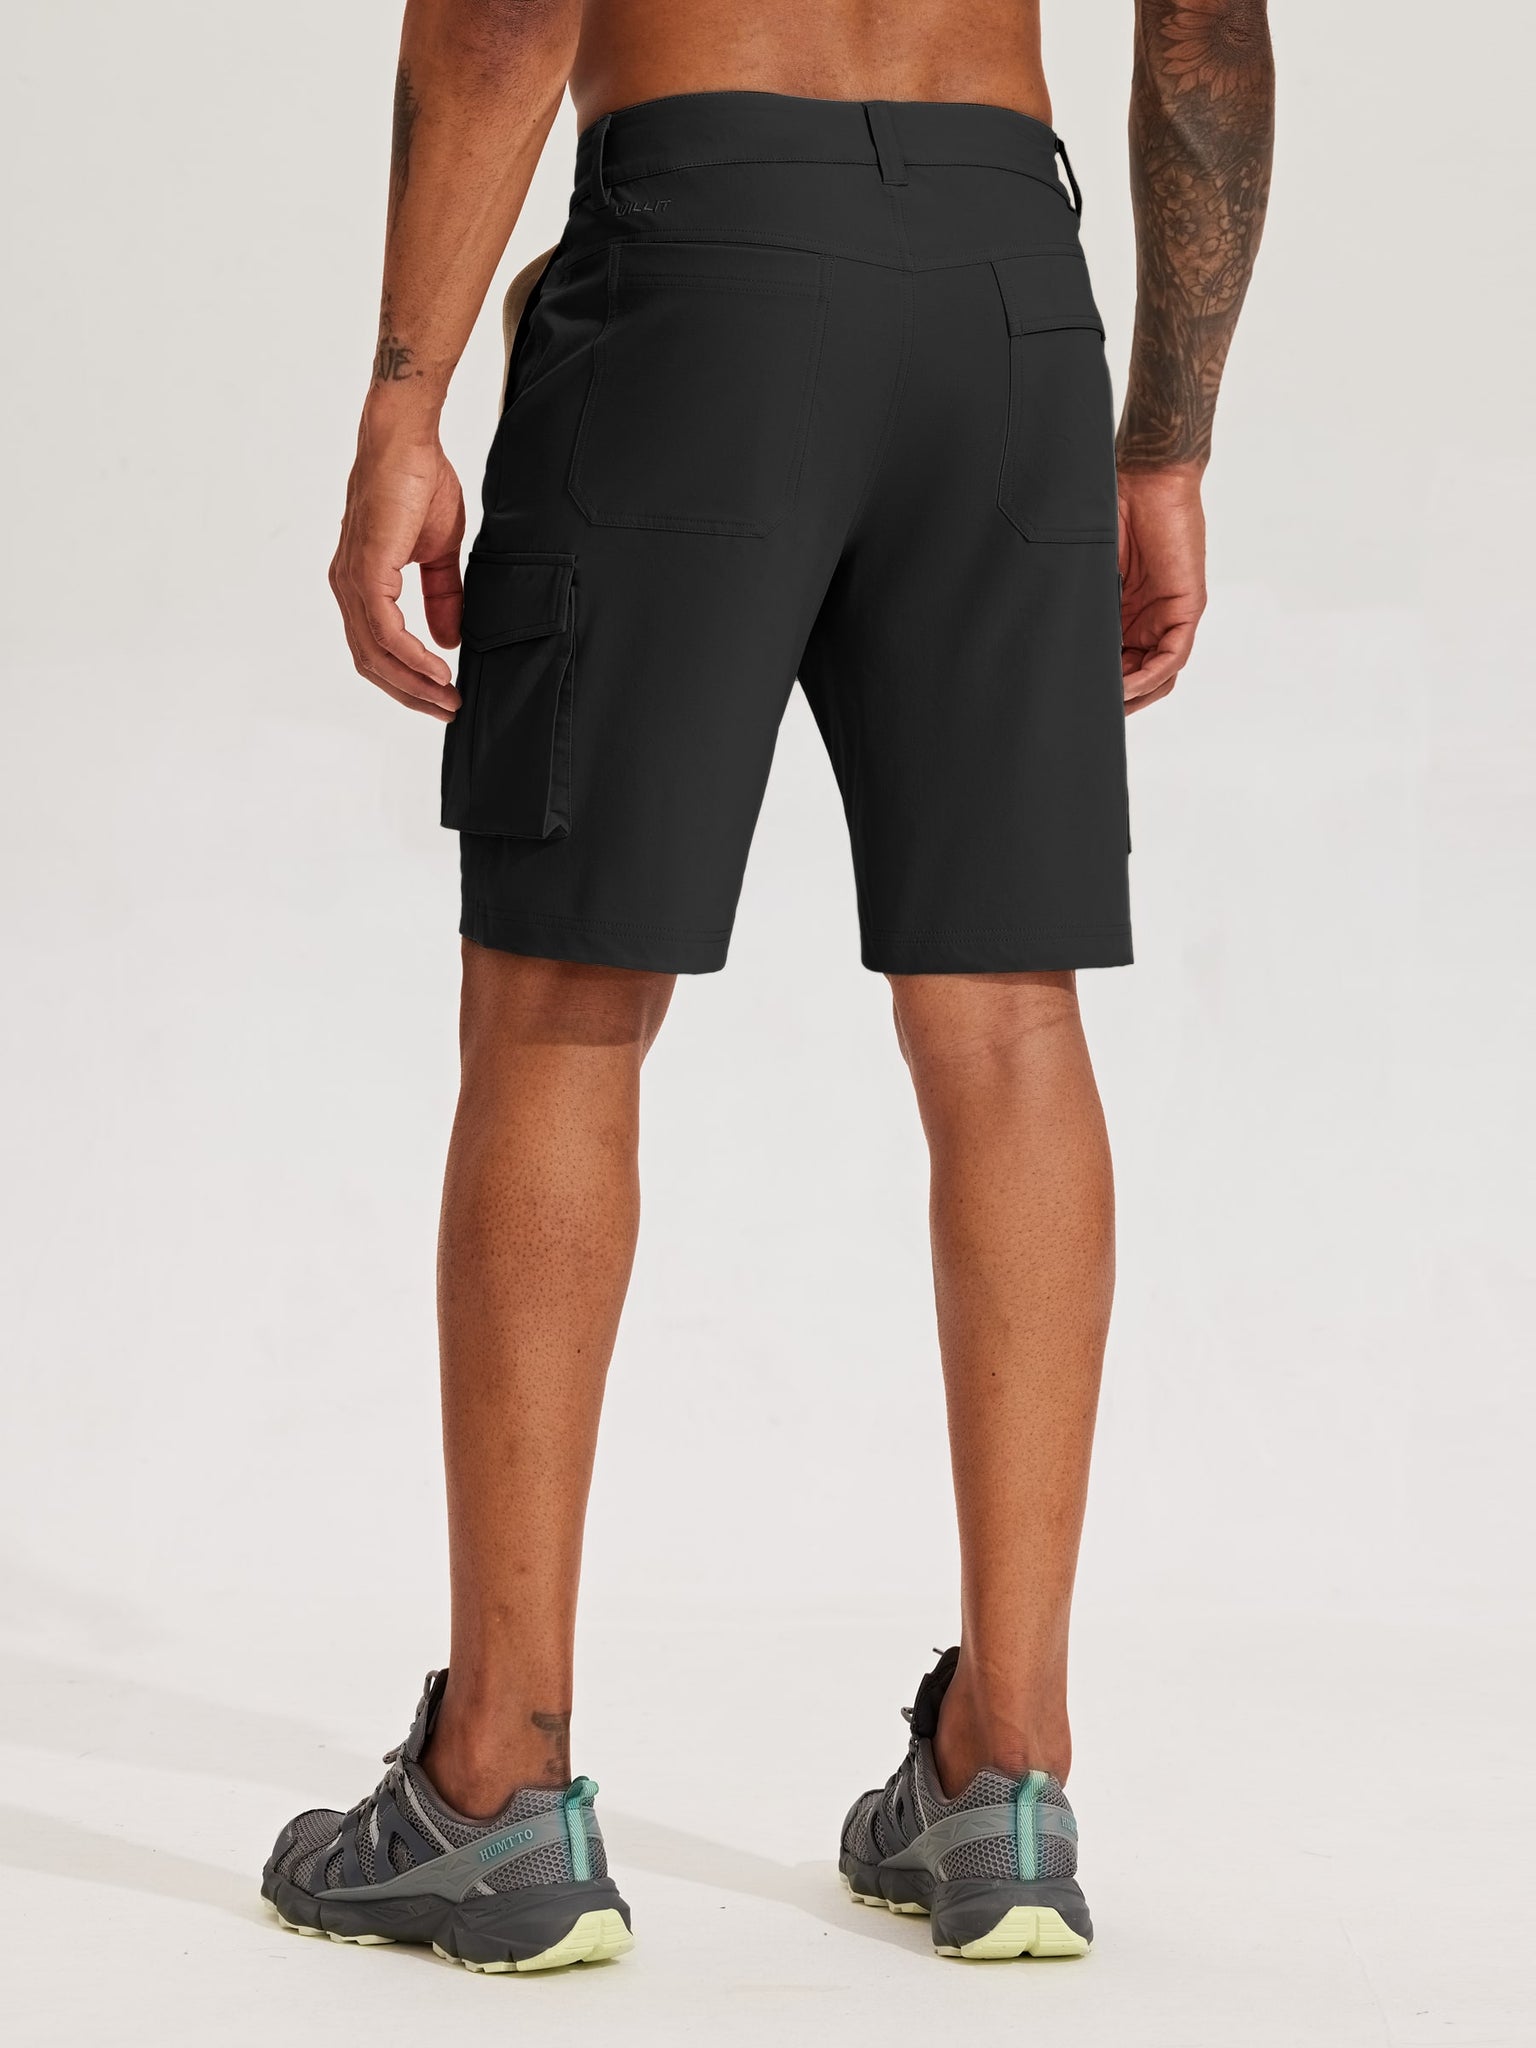 Men's Stretch Cargo Shorts 9 Inch_Black3